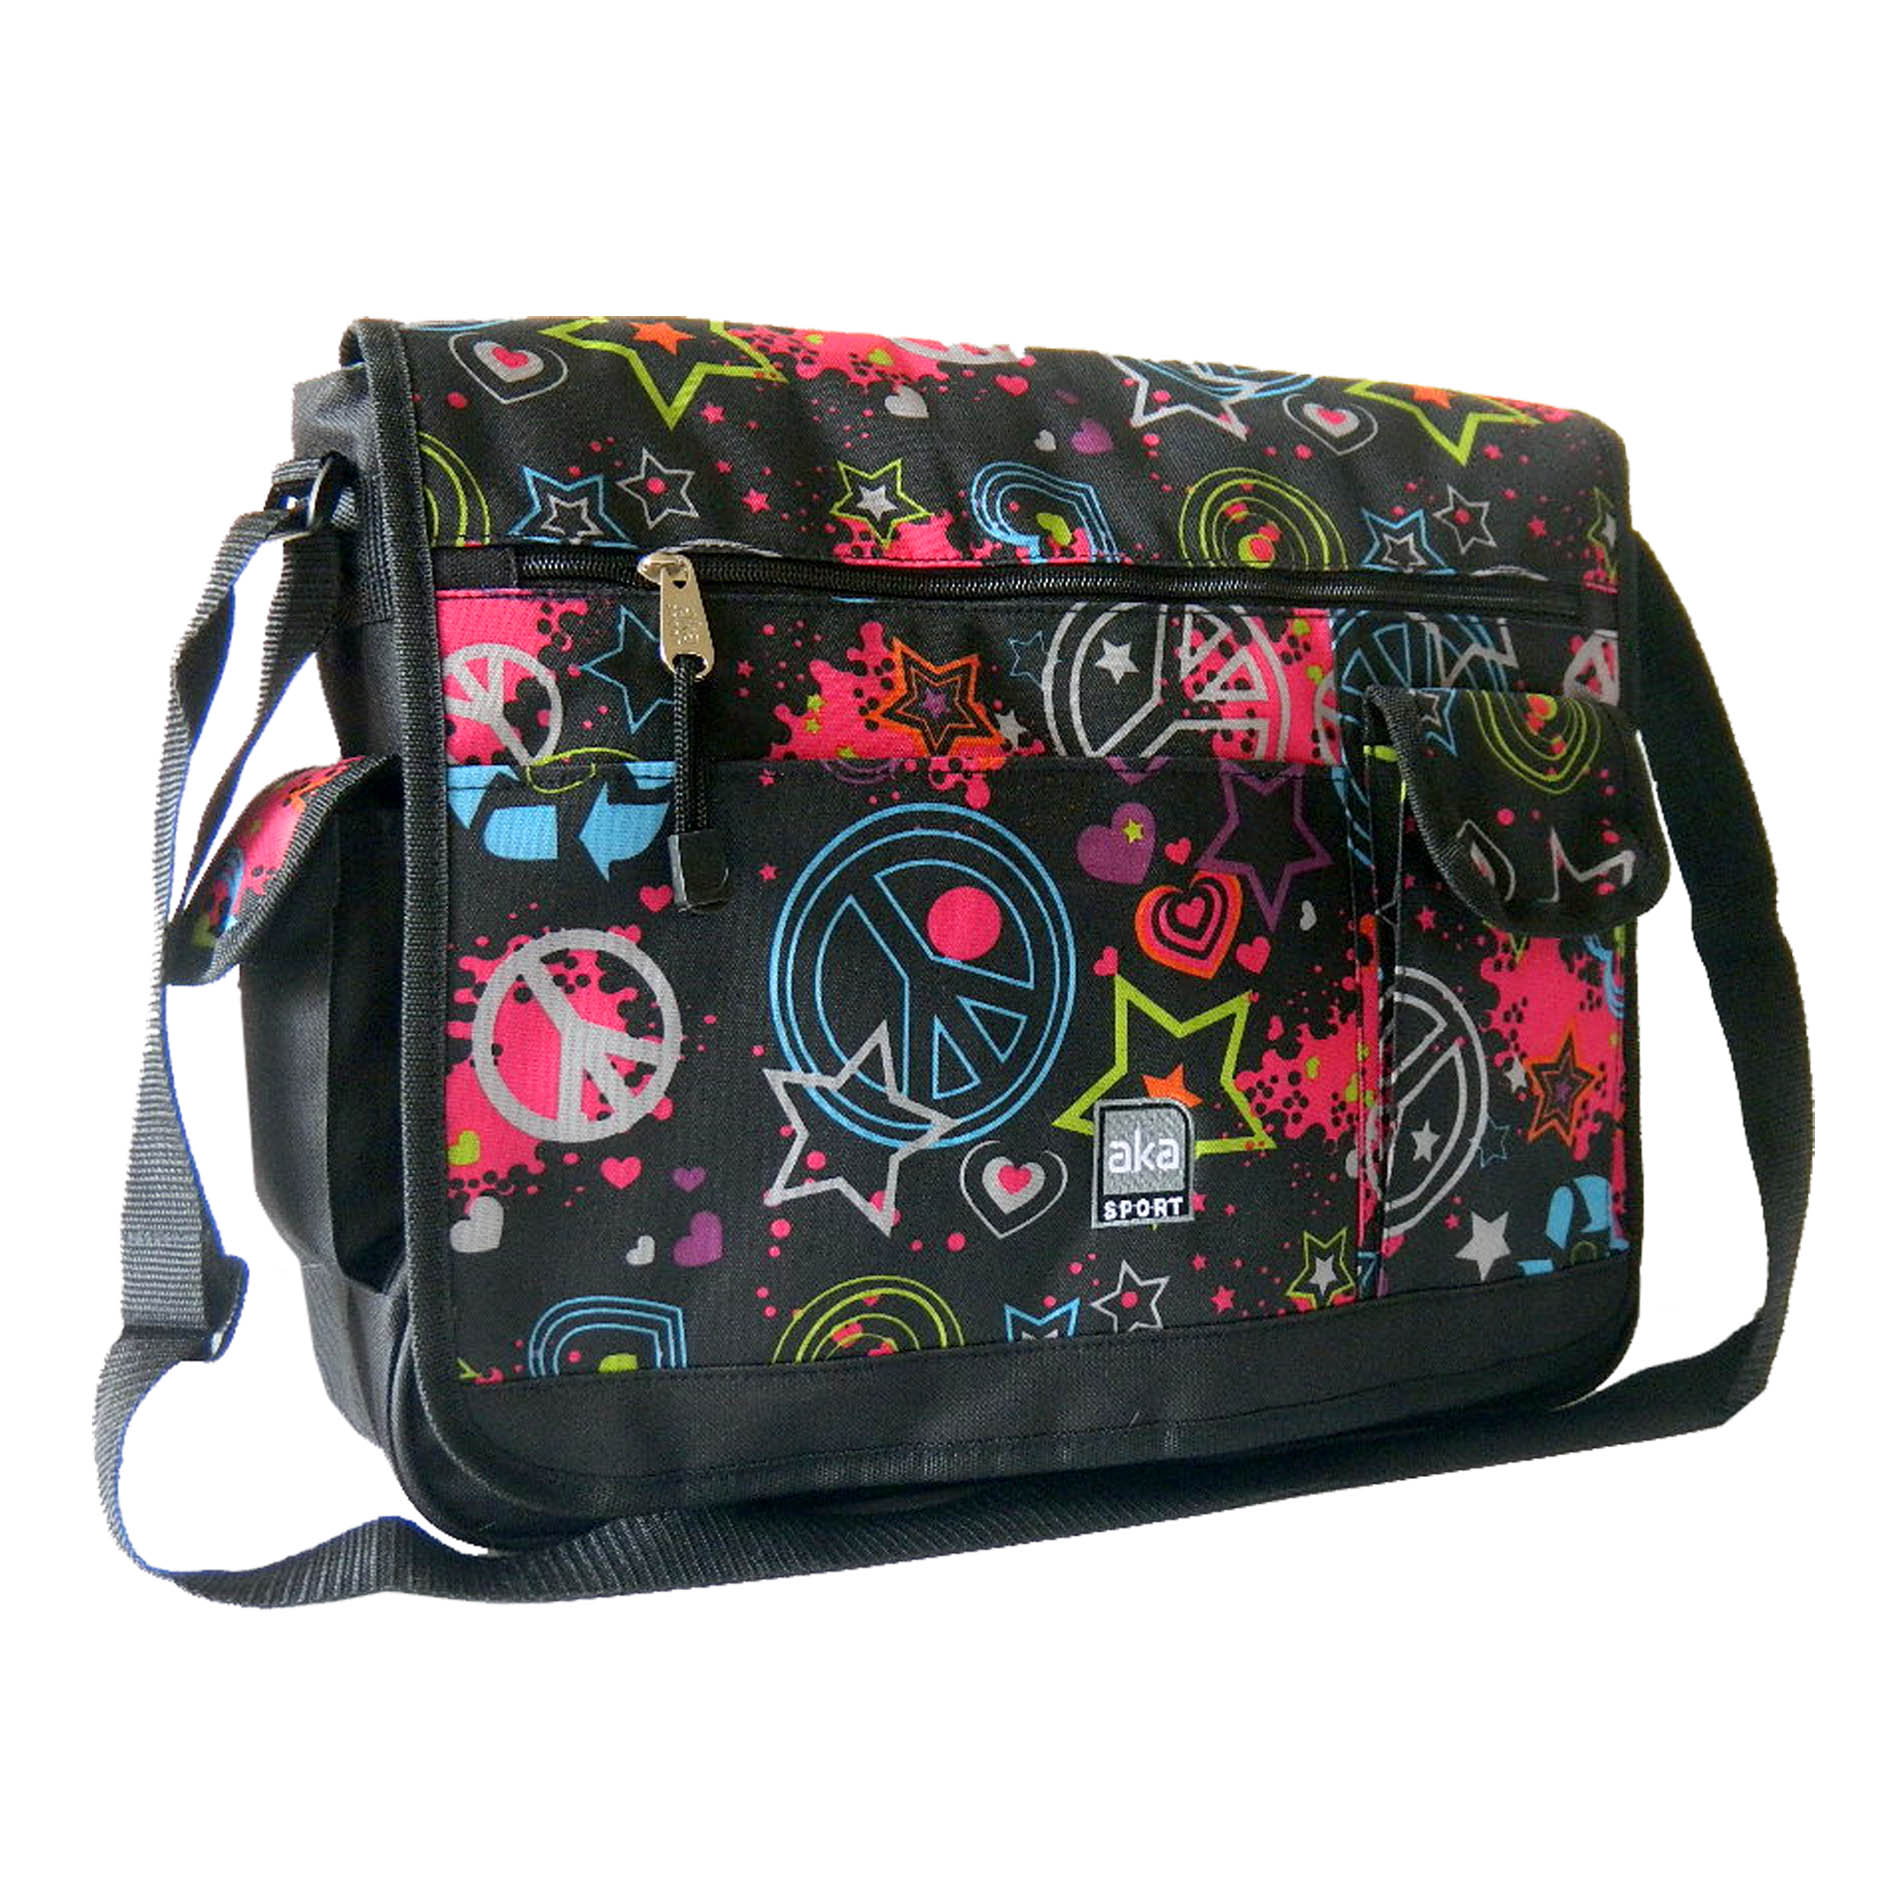 AKA Sport Girls’ Messenger Bags Only $9.99 + Free Pickup!